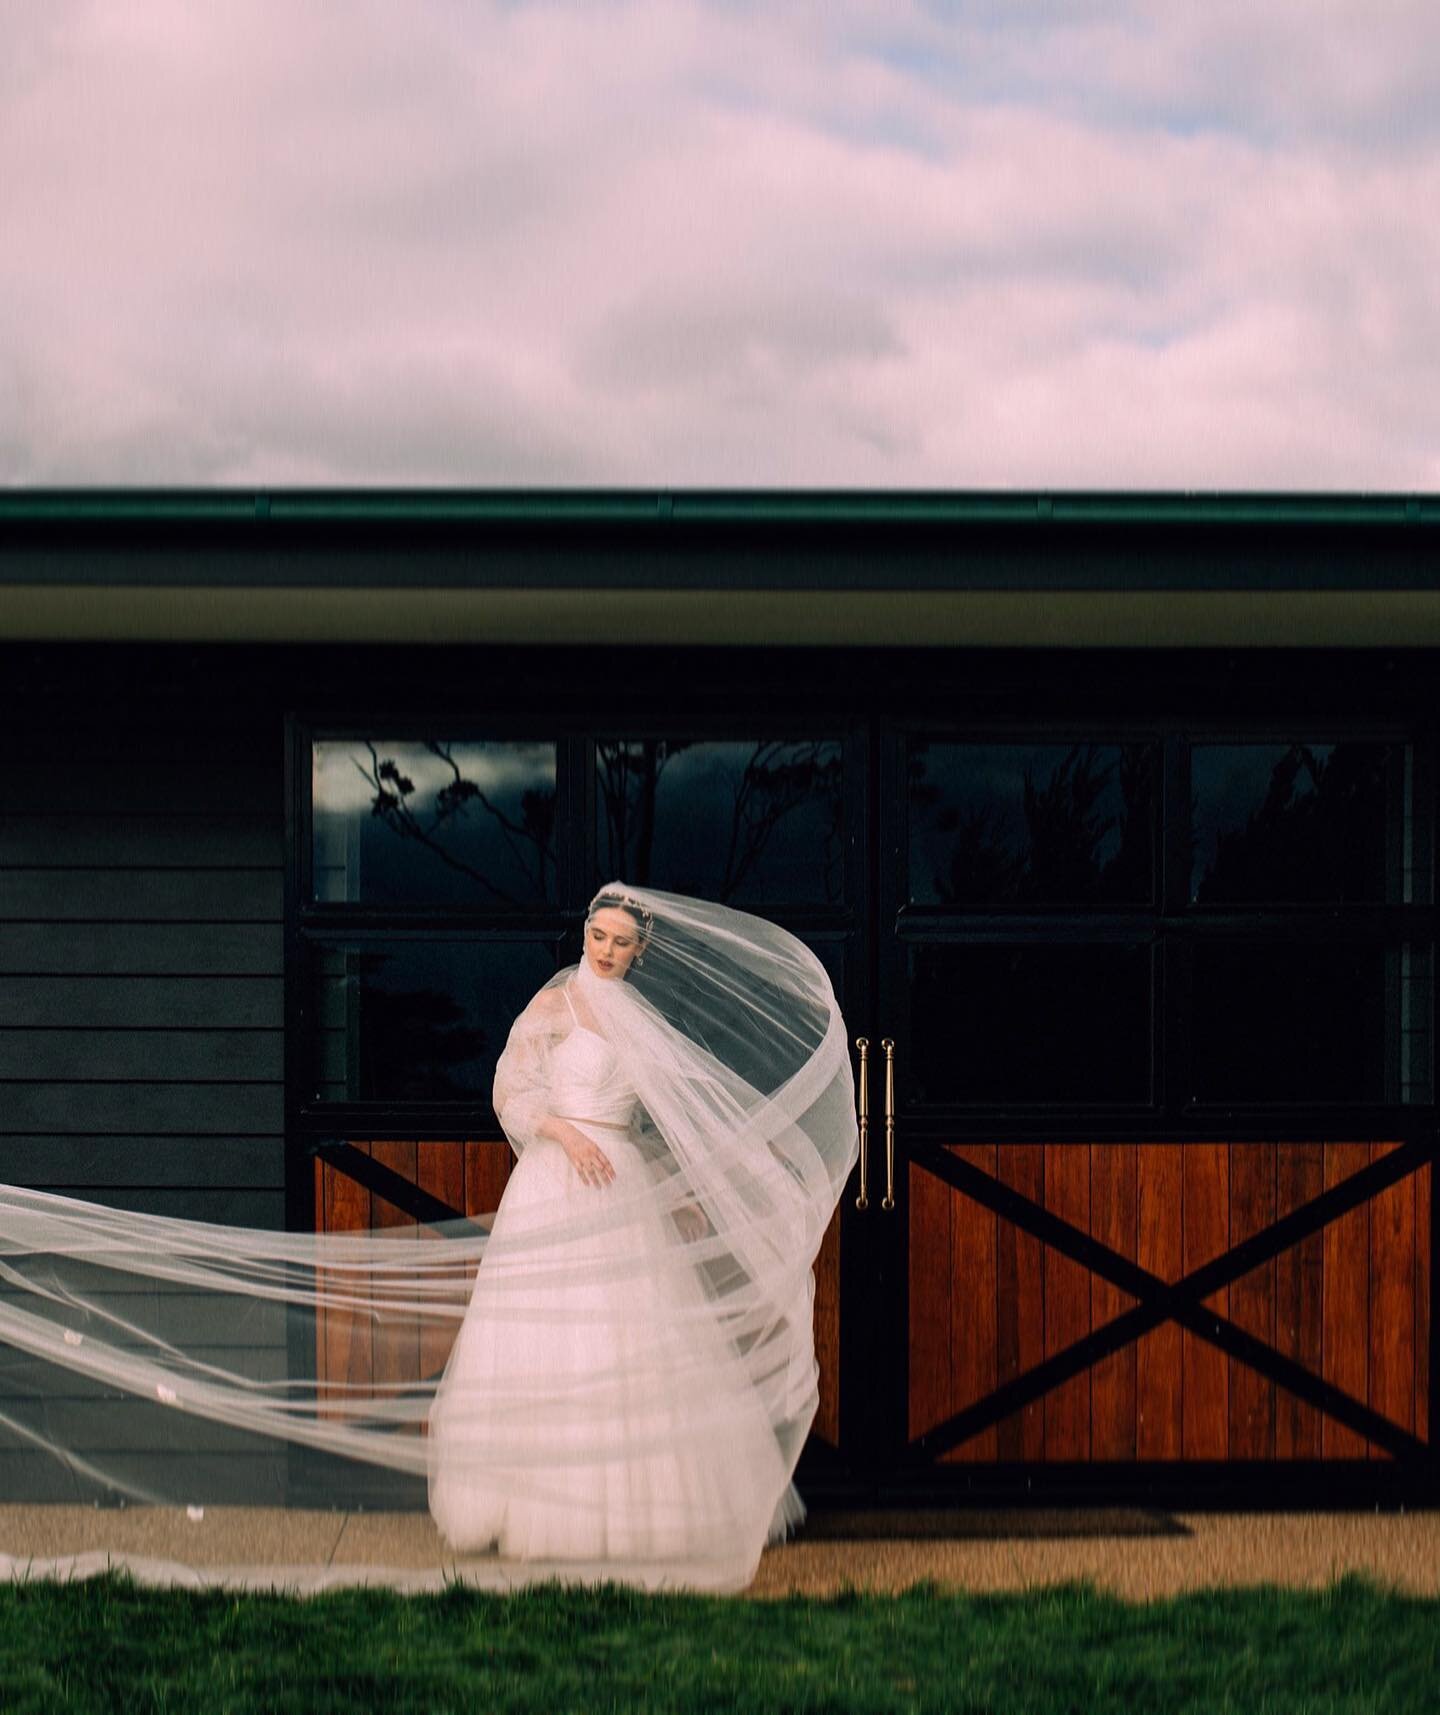 Magic of wind at the barn events styled shoot&hellip;

.
.
.
.
.

#macedonrangesweddingphotographer
#warrnamboolweddingphotographer
#australianelopement
#elopementphotography
#australianweddingphotographer
#australianwedding
#weddingchicks
#melbourne